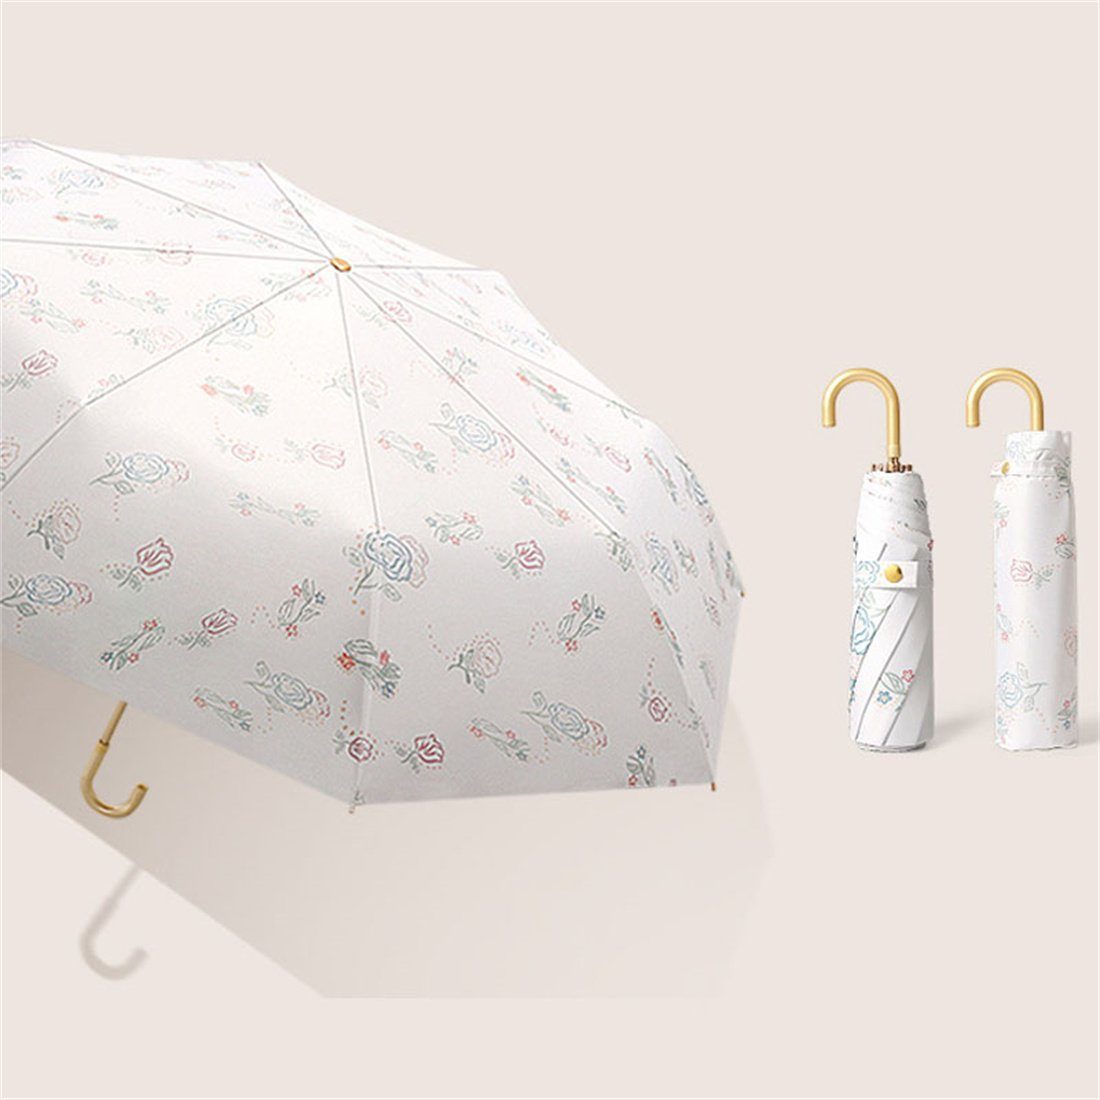 DÖRÖY Taschenregenschirm UV-Faltschirm,gebogener Hakenschirm,Blumenmuster-Regenschirm,regenfest